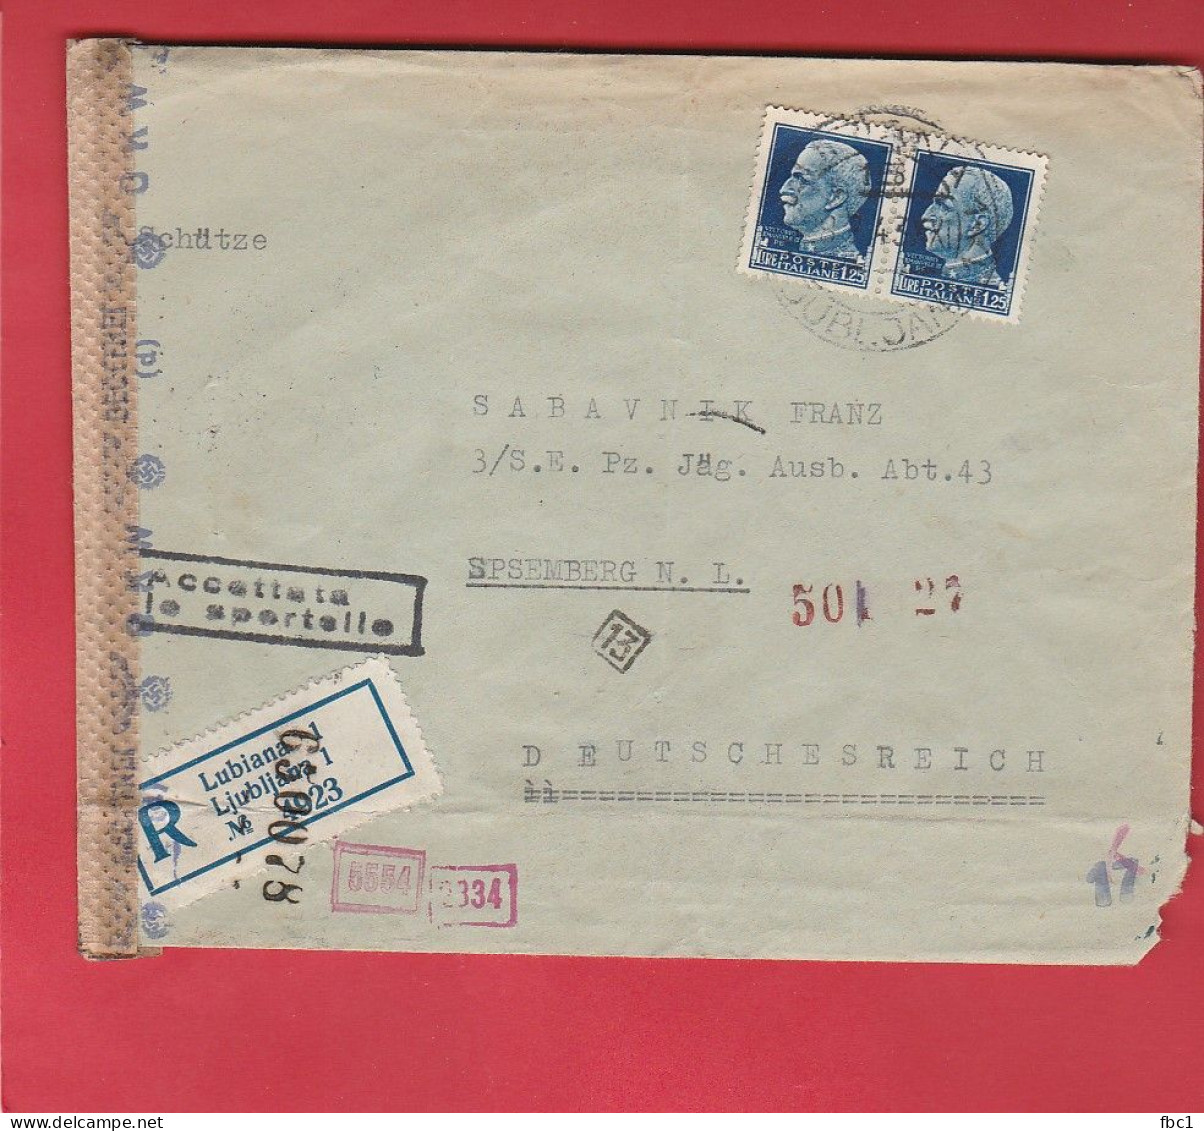 Italian Occupation - Lubiana - Ljubljana - Registered Letter For Spsemberg (Netherlands) 1943 - German Censors - WW2 - Lubiana